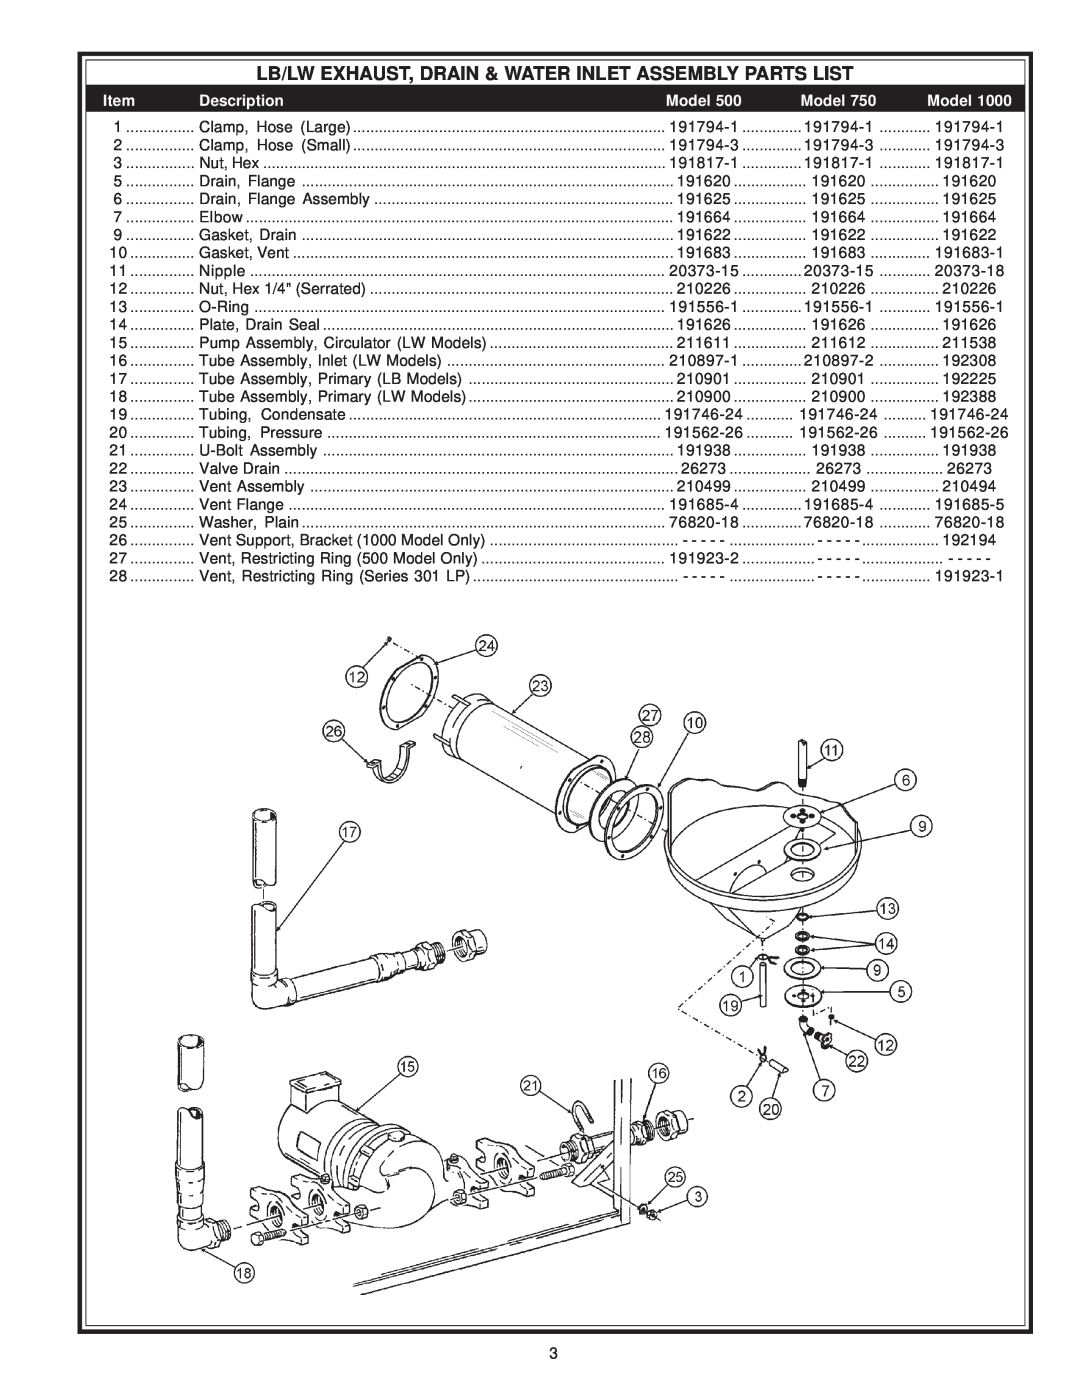 A.O. Smith 750 & 1000, LB/LW: 500 manual Lb/Lw Exhaust, Drain & Water Inlet Assembly Parts List, Description, Model 